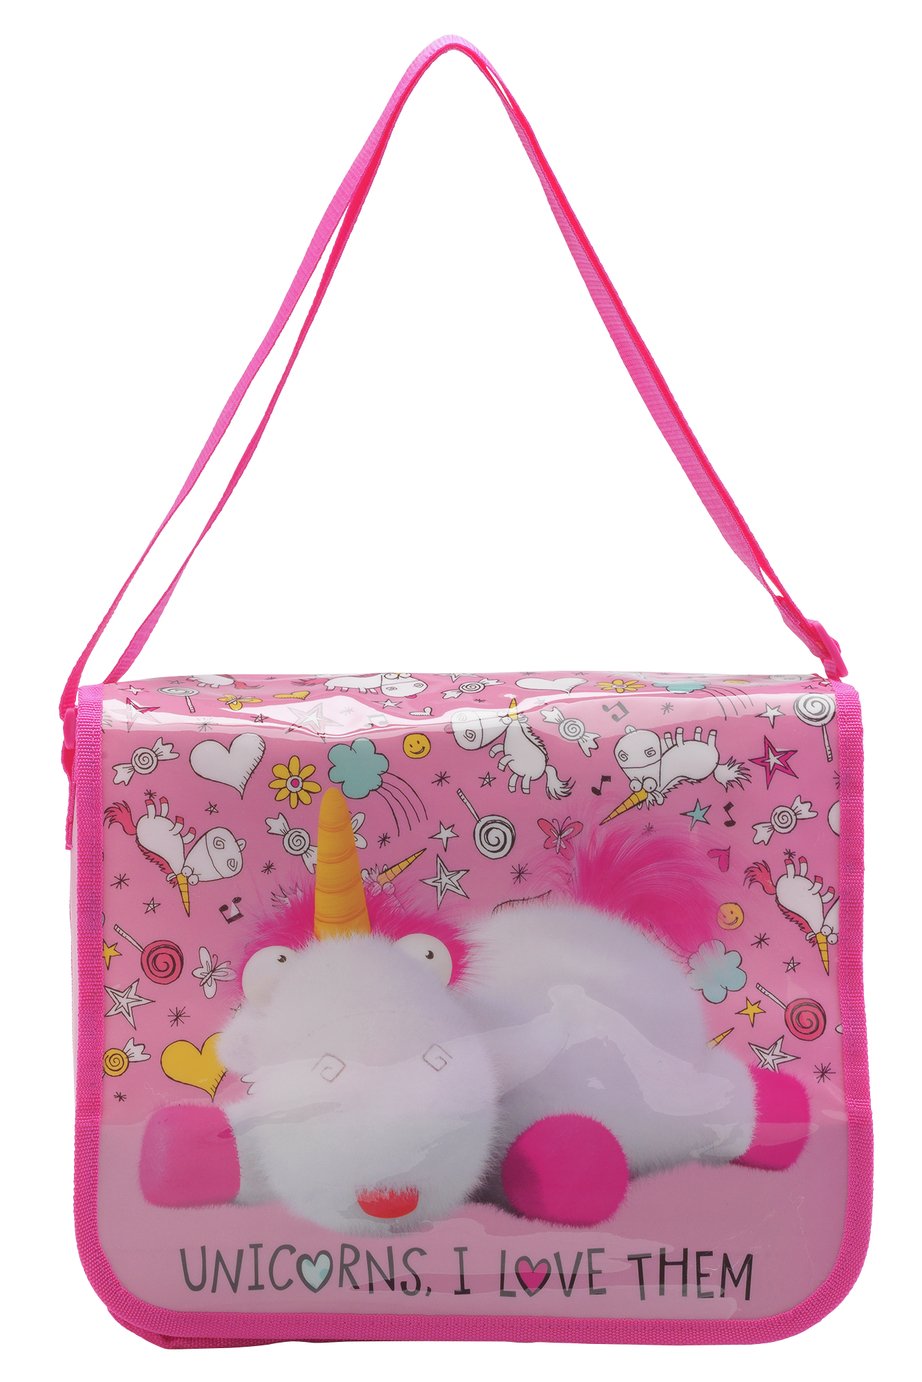 Minions Unicorn Pink Messenger Bag